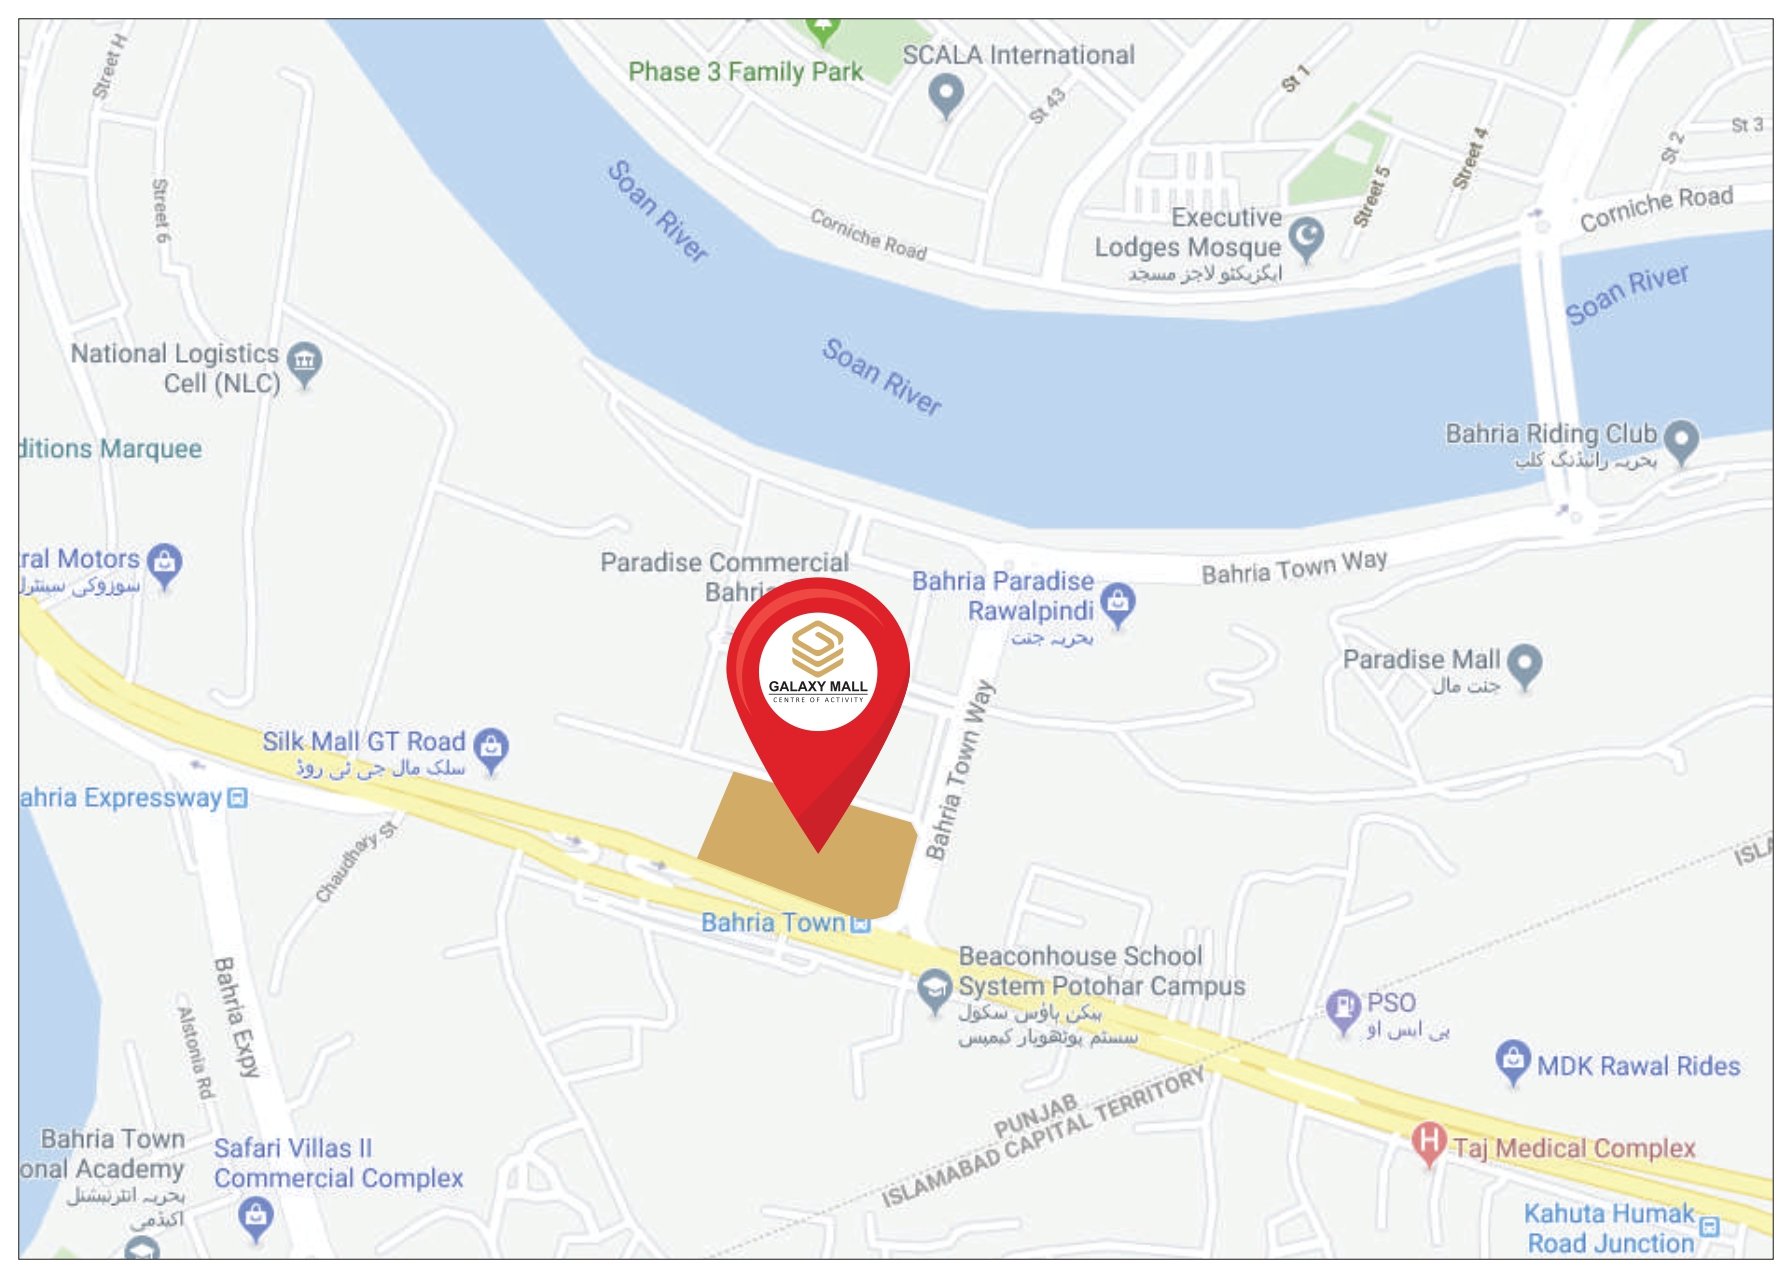 Location of Galaxy Mall on google